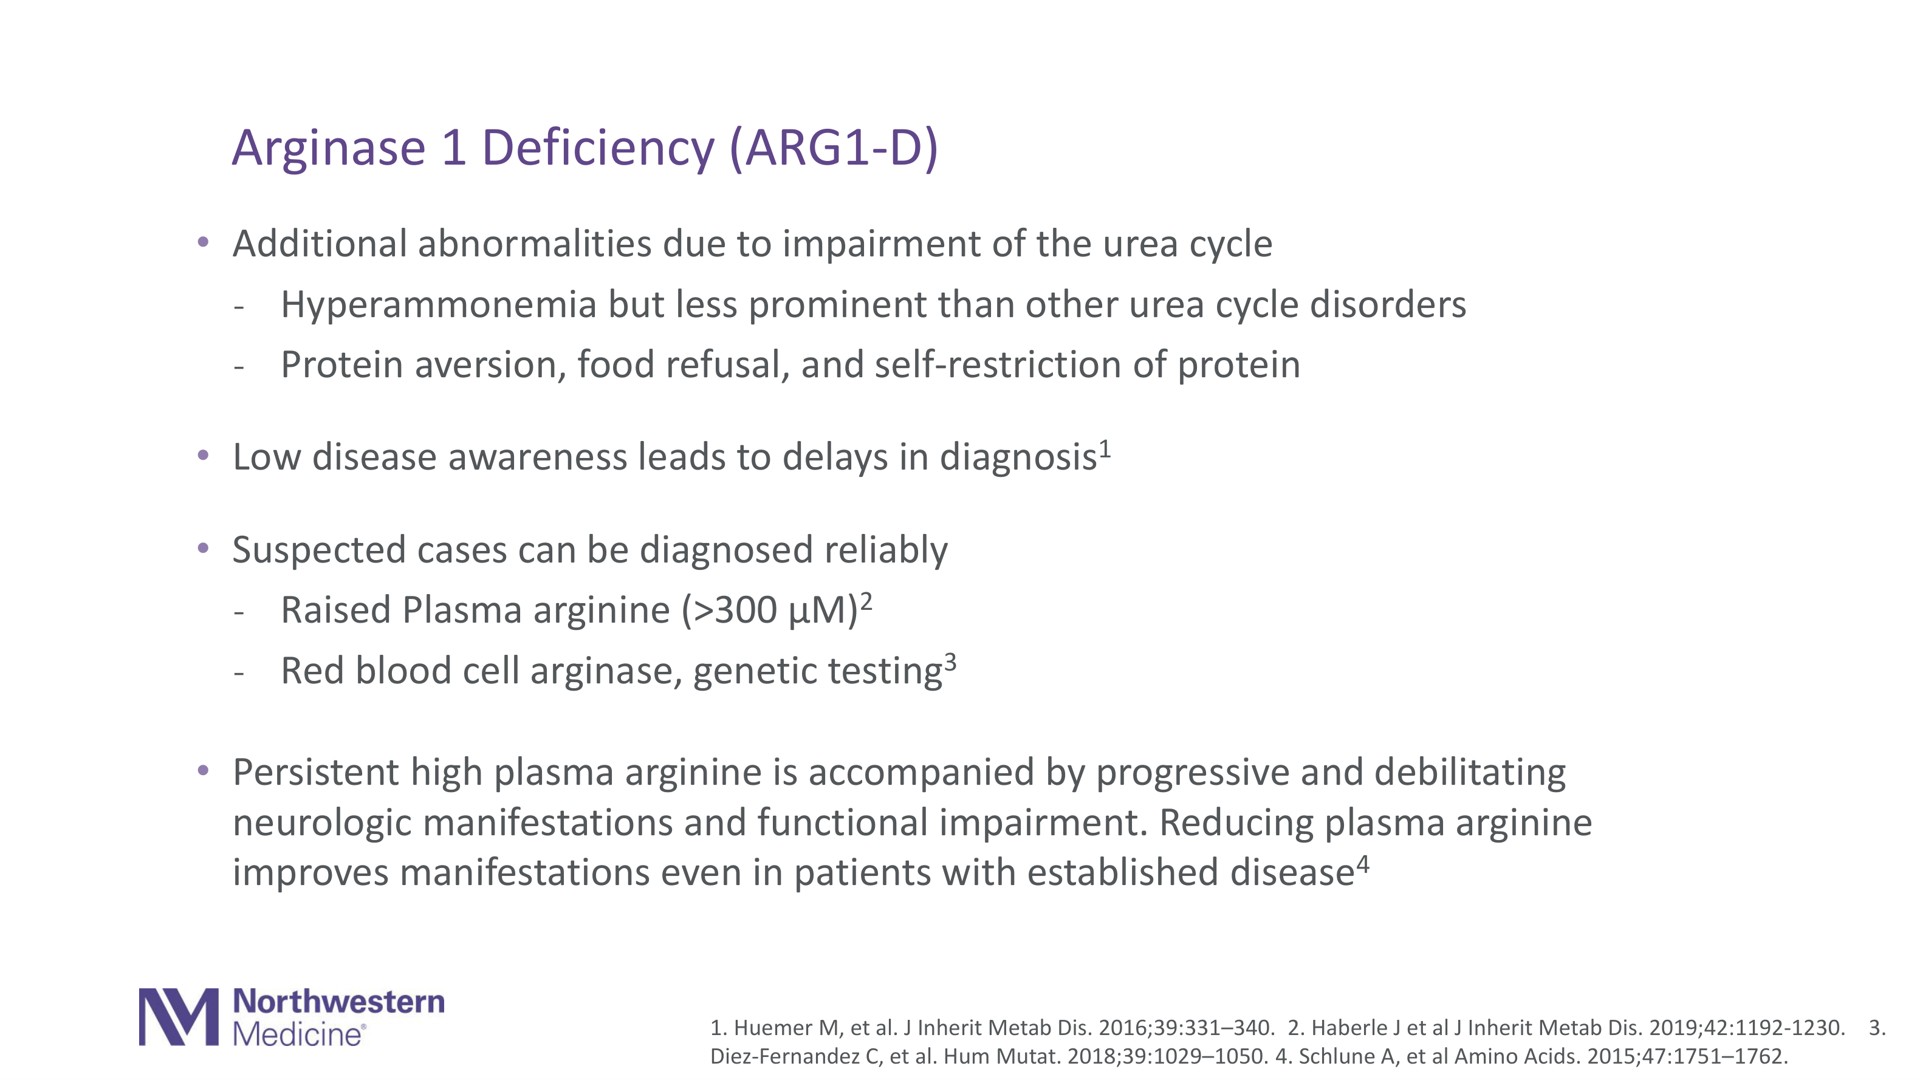 deficiency | Aeglea BioTherapeutics